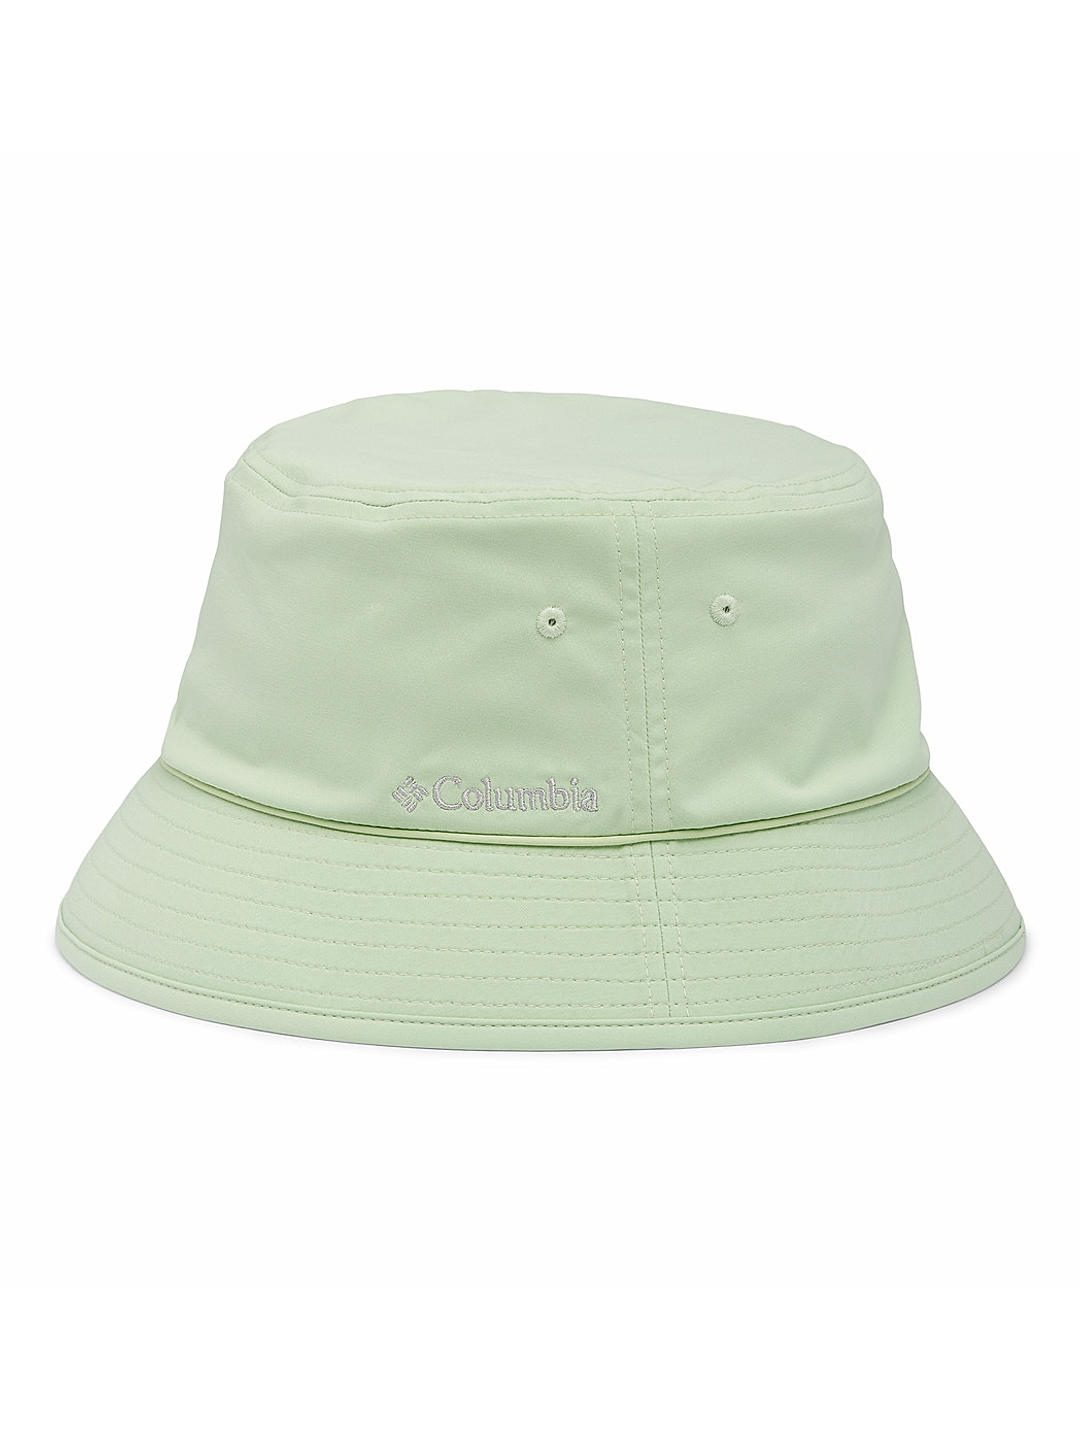 Columbia Sportswear Bucket Hat Price in India - Buy Columbia Sportswear Bucket  Hat online at